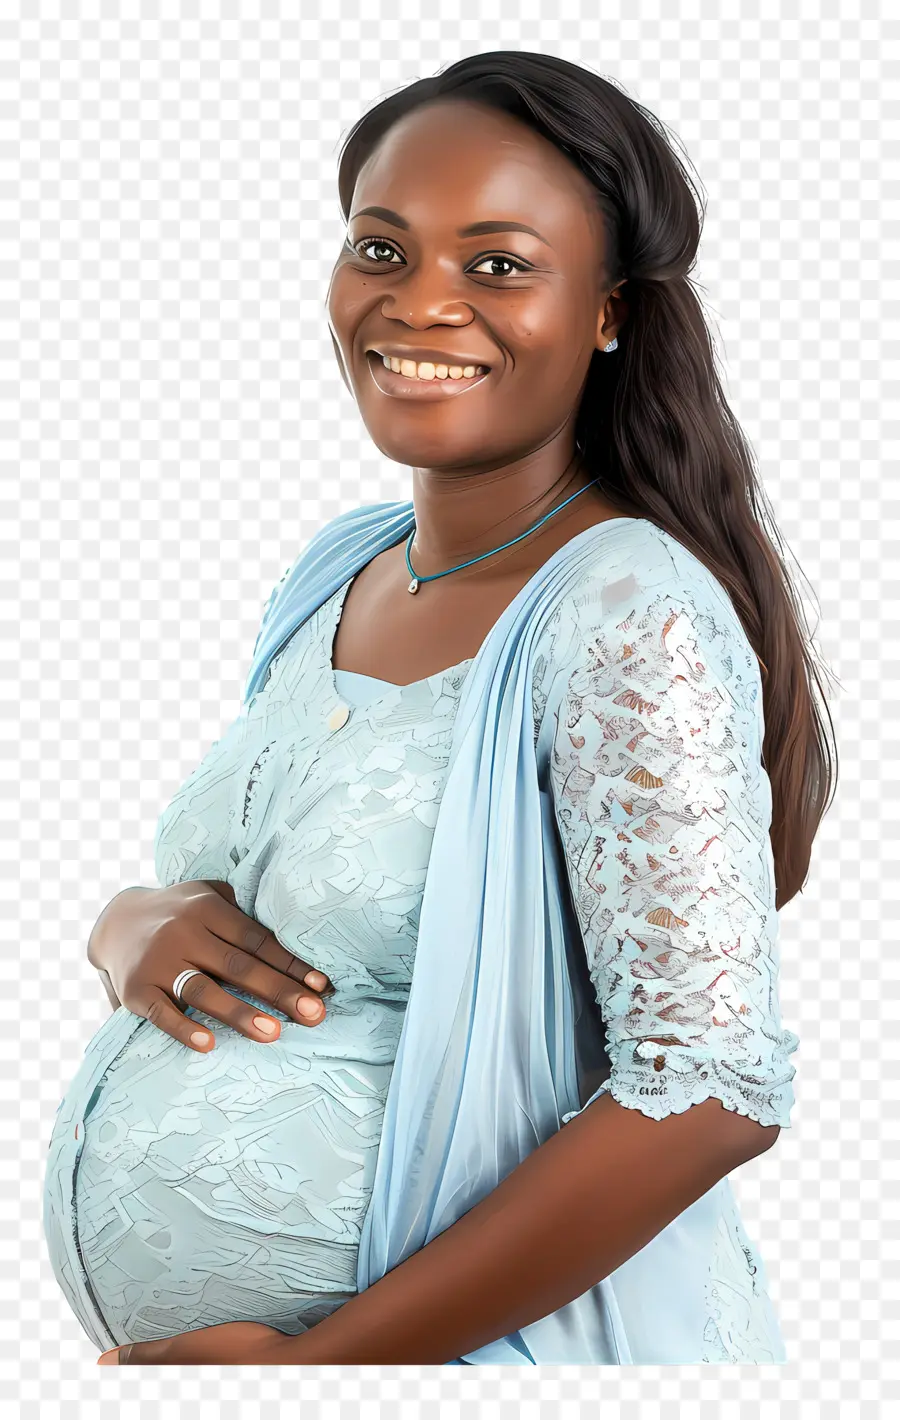 Schwangere Frau Schwangerschaft Mutterschaft Baby Bump Schwangerschaft Mode - Schwangere Frau in blauem Kleid lächelte zuversichtlich